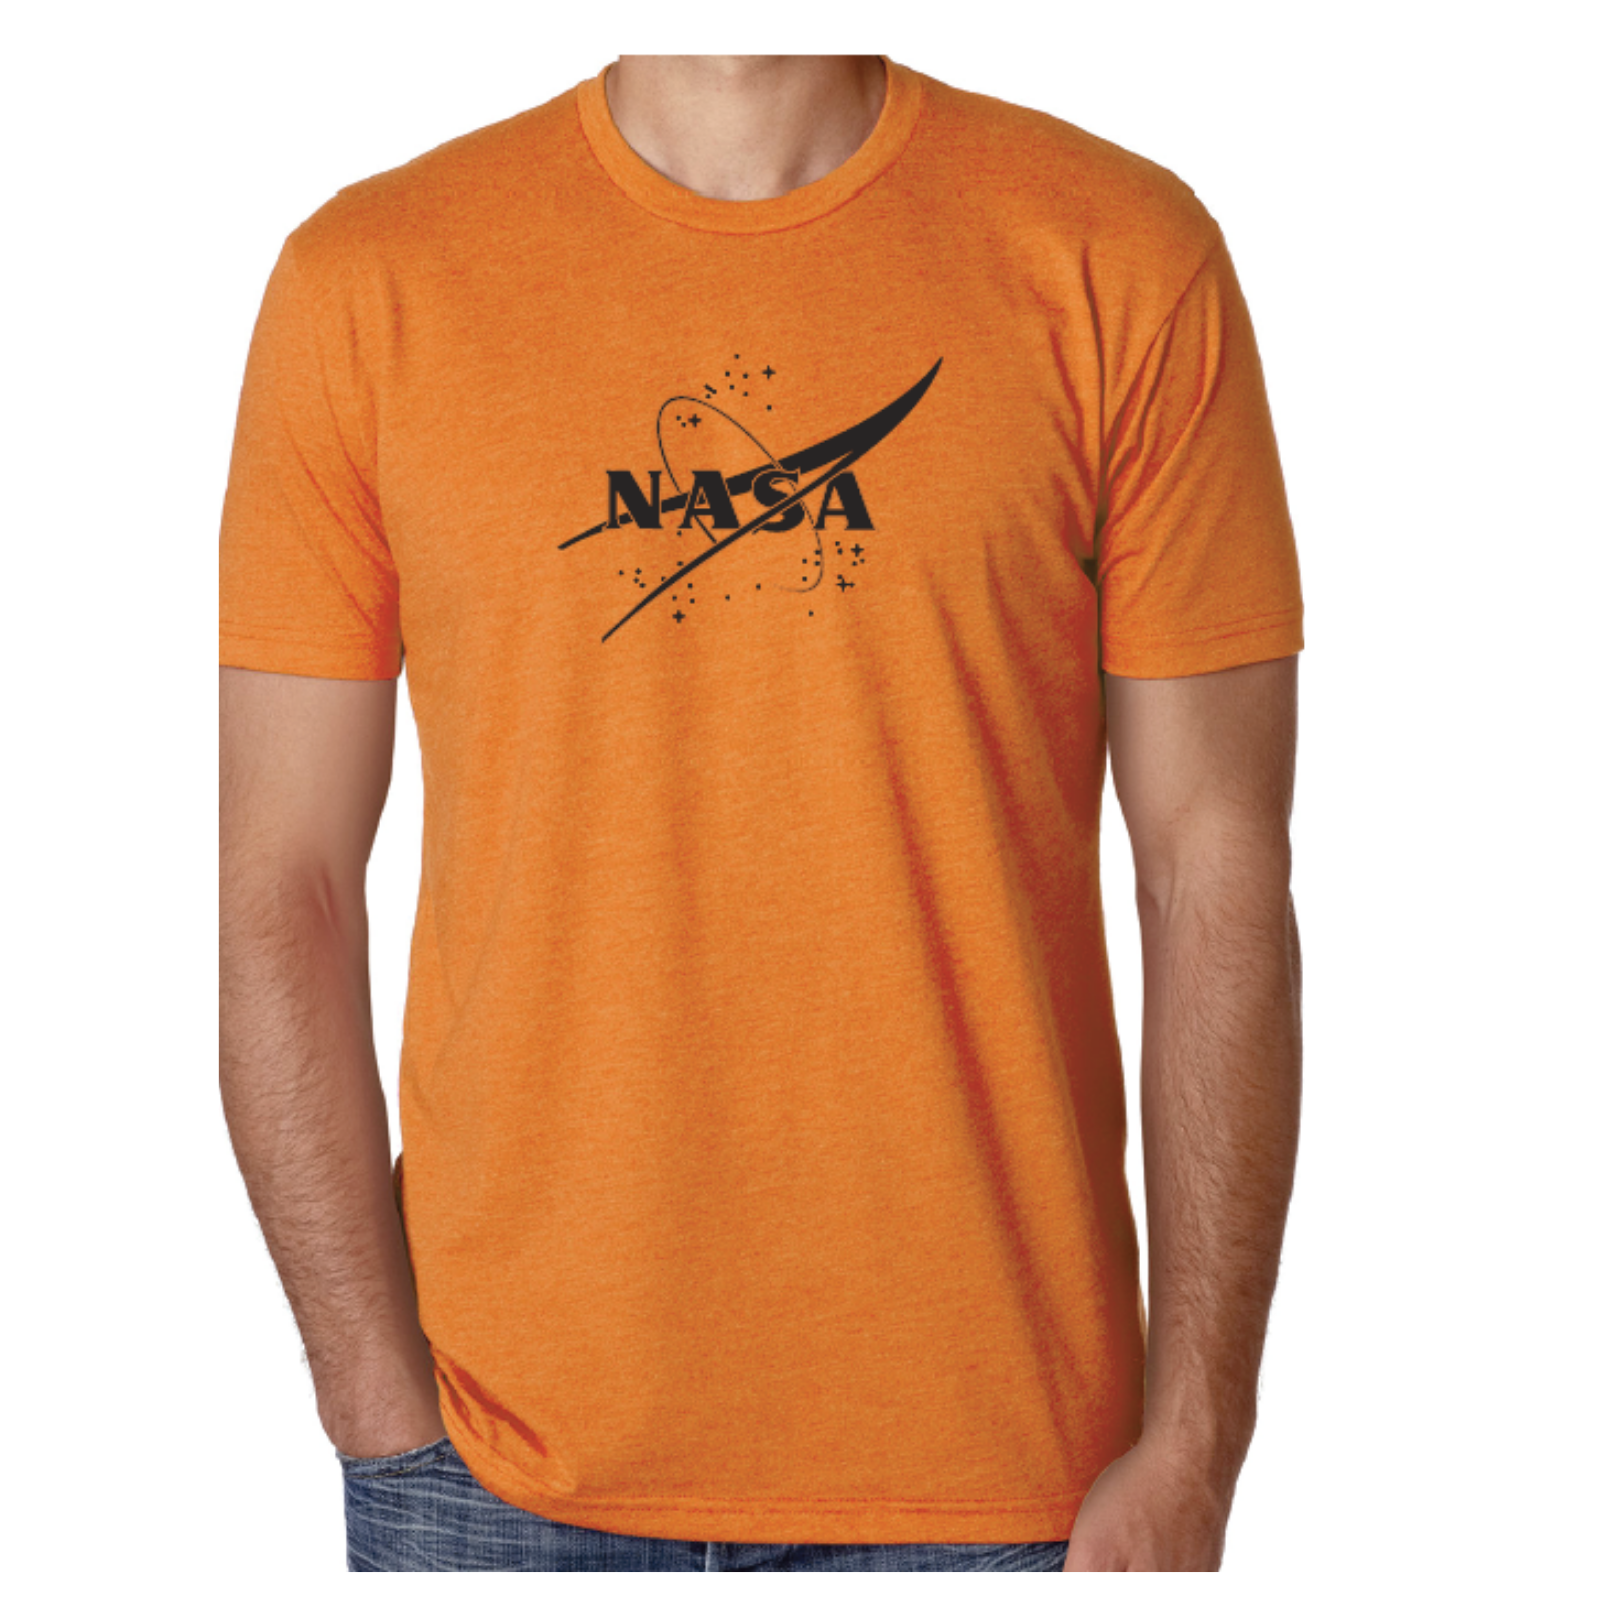 NASA Fall T-Shirt Black or Orange, Adult and Youth